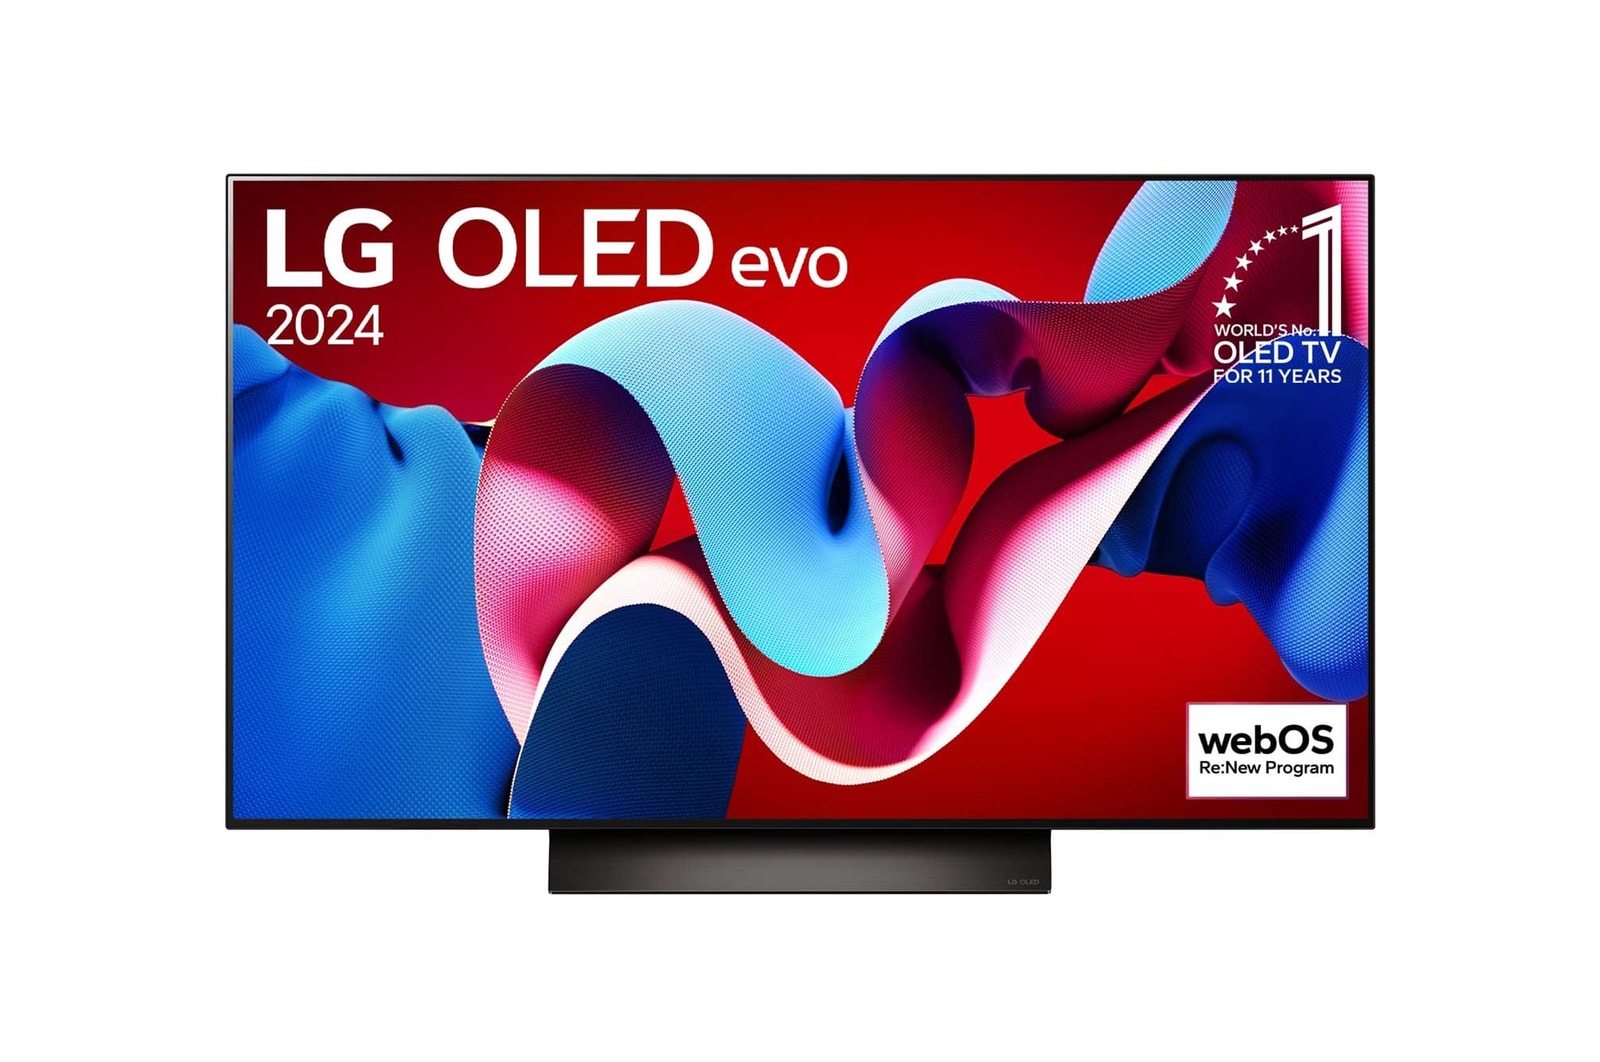 LG OLED evo TV、OLED C4の正面画像。11年連続世界第1位のエンブレムとwebOS Re:Newプログラムlogoが2本のポールスタンドを使用した画面に映し出される